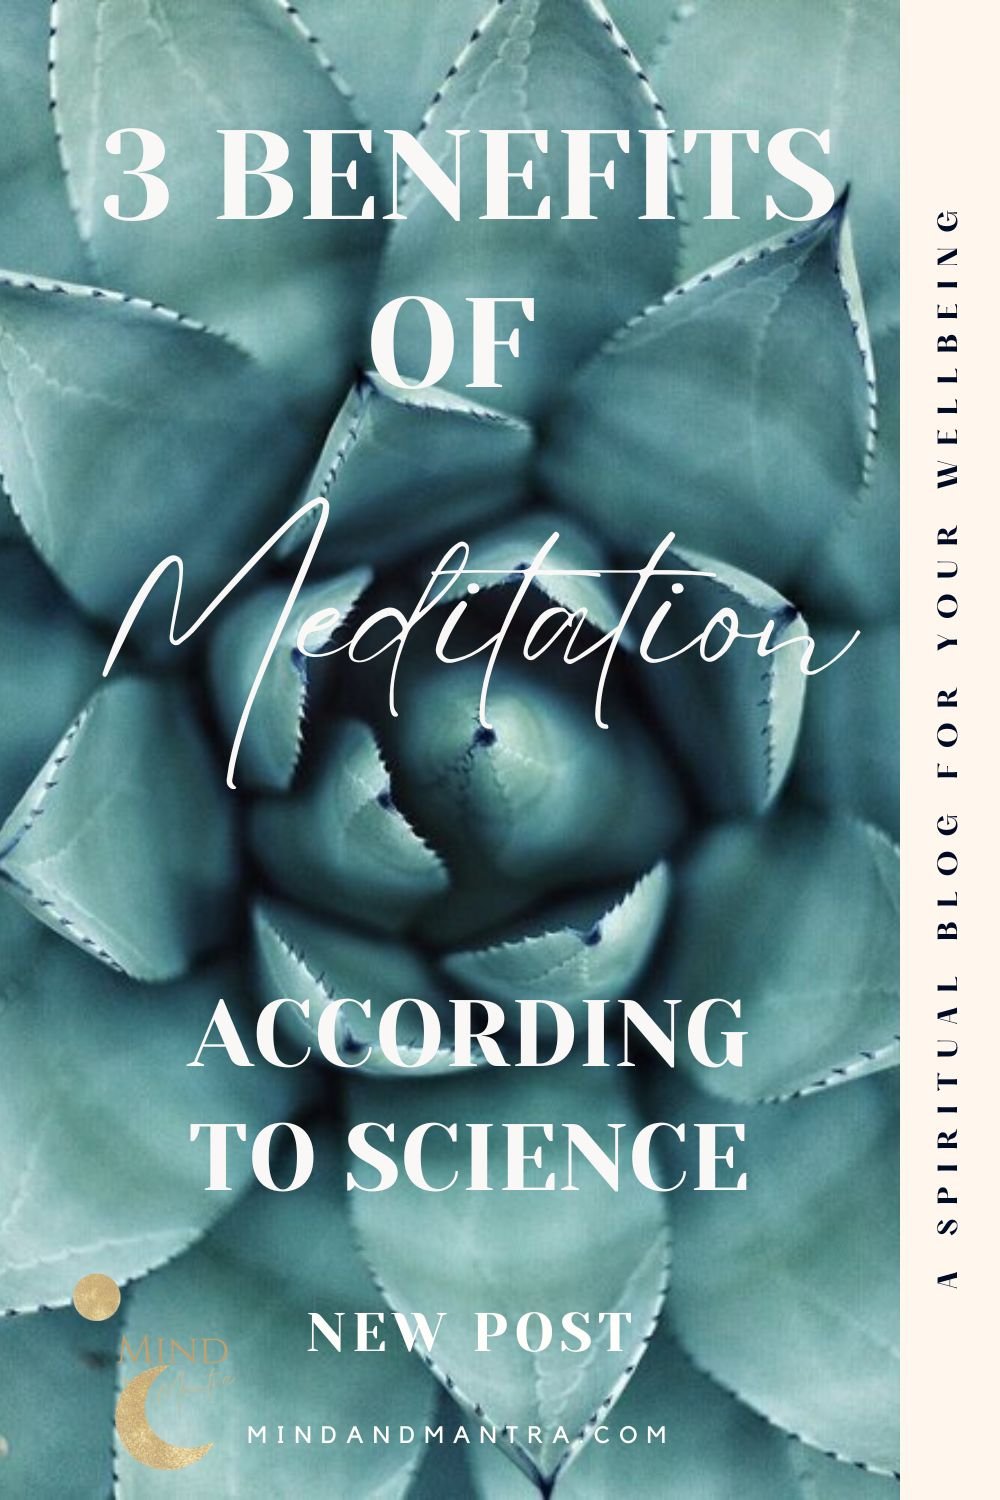 meditation according to science.jpg